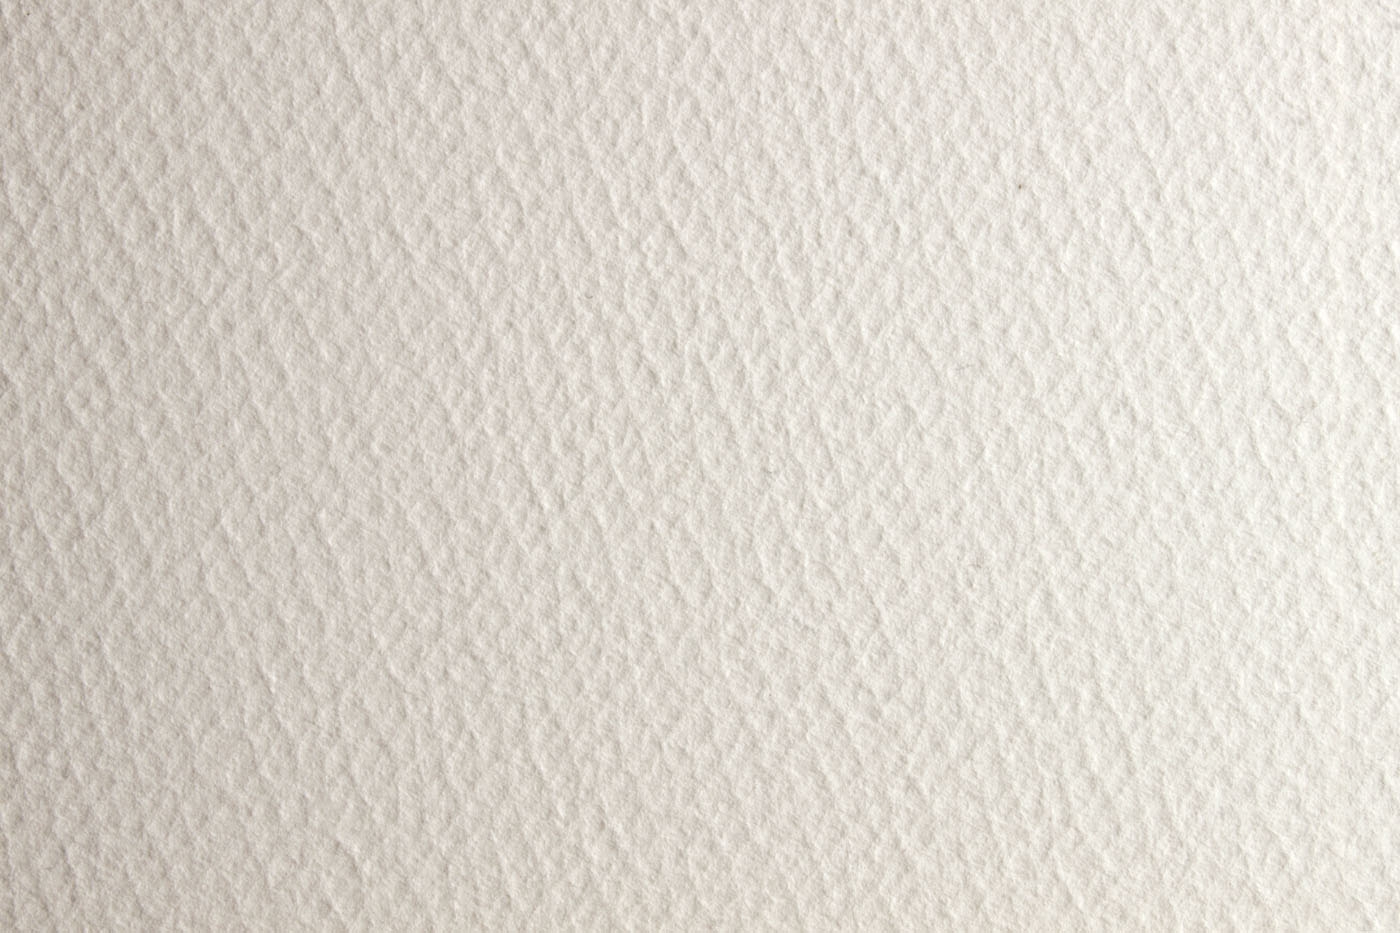 Бумага для акварели ARTISTICO TRADITIONAL WHITE 300г/кв.м 560х760мм grain fin (среднее зерно) хлопок 100% по 573.00 руб от Fabriano